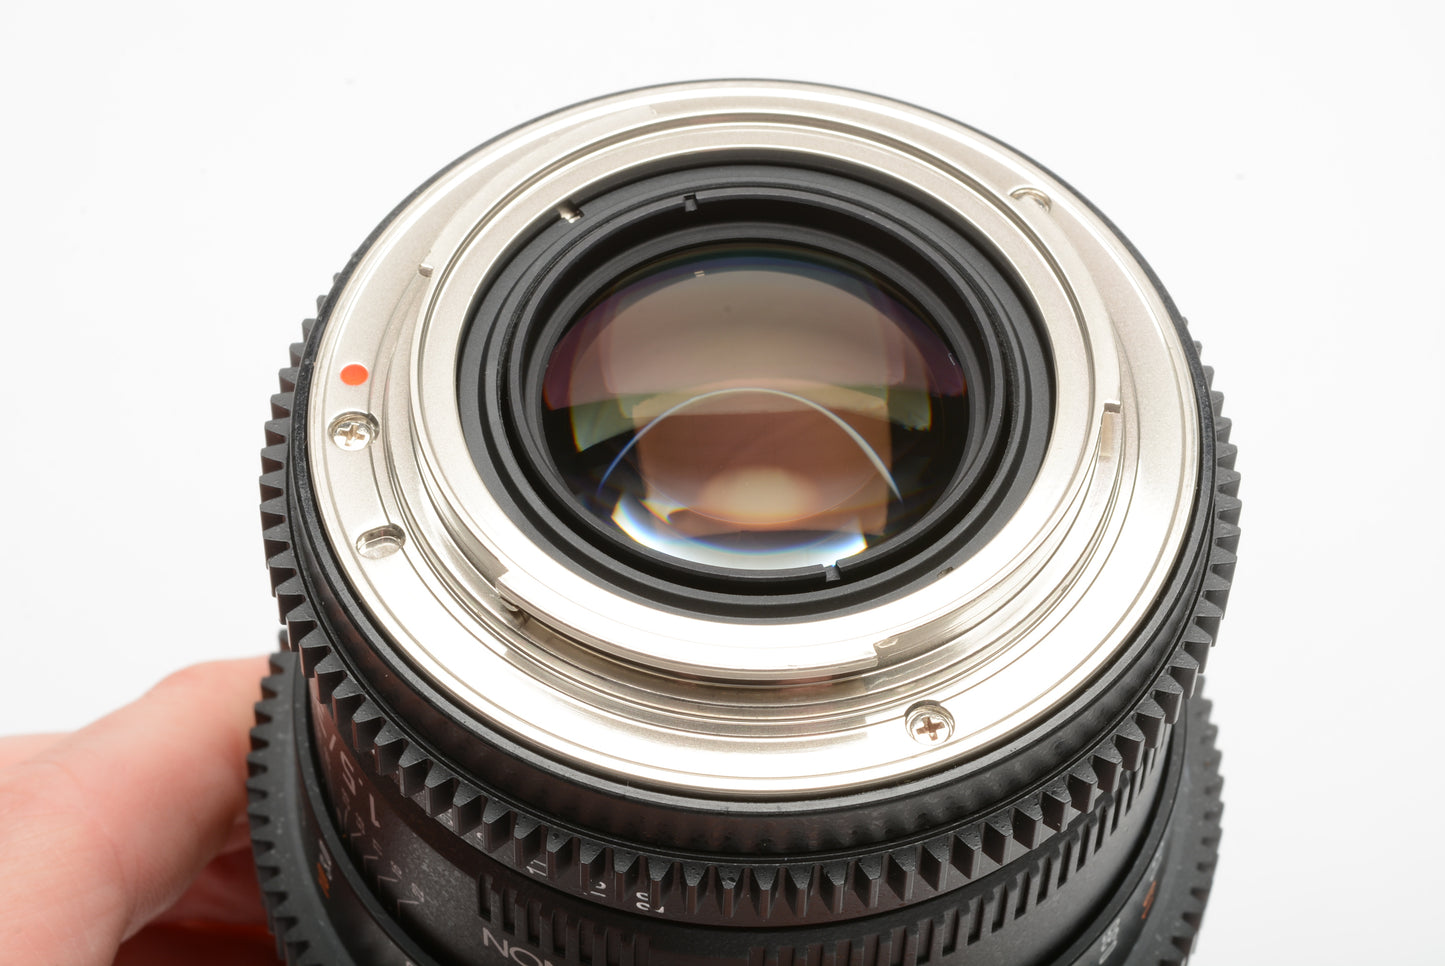 Rokinon 35mm T1.5 AS UMC II Cine DS Lens for Canon EF Mount #DS35M-C Mint-